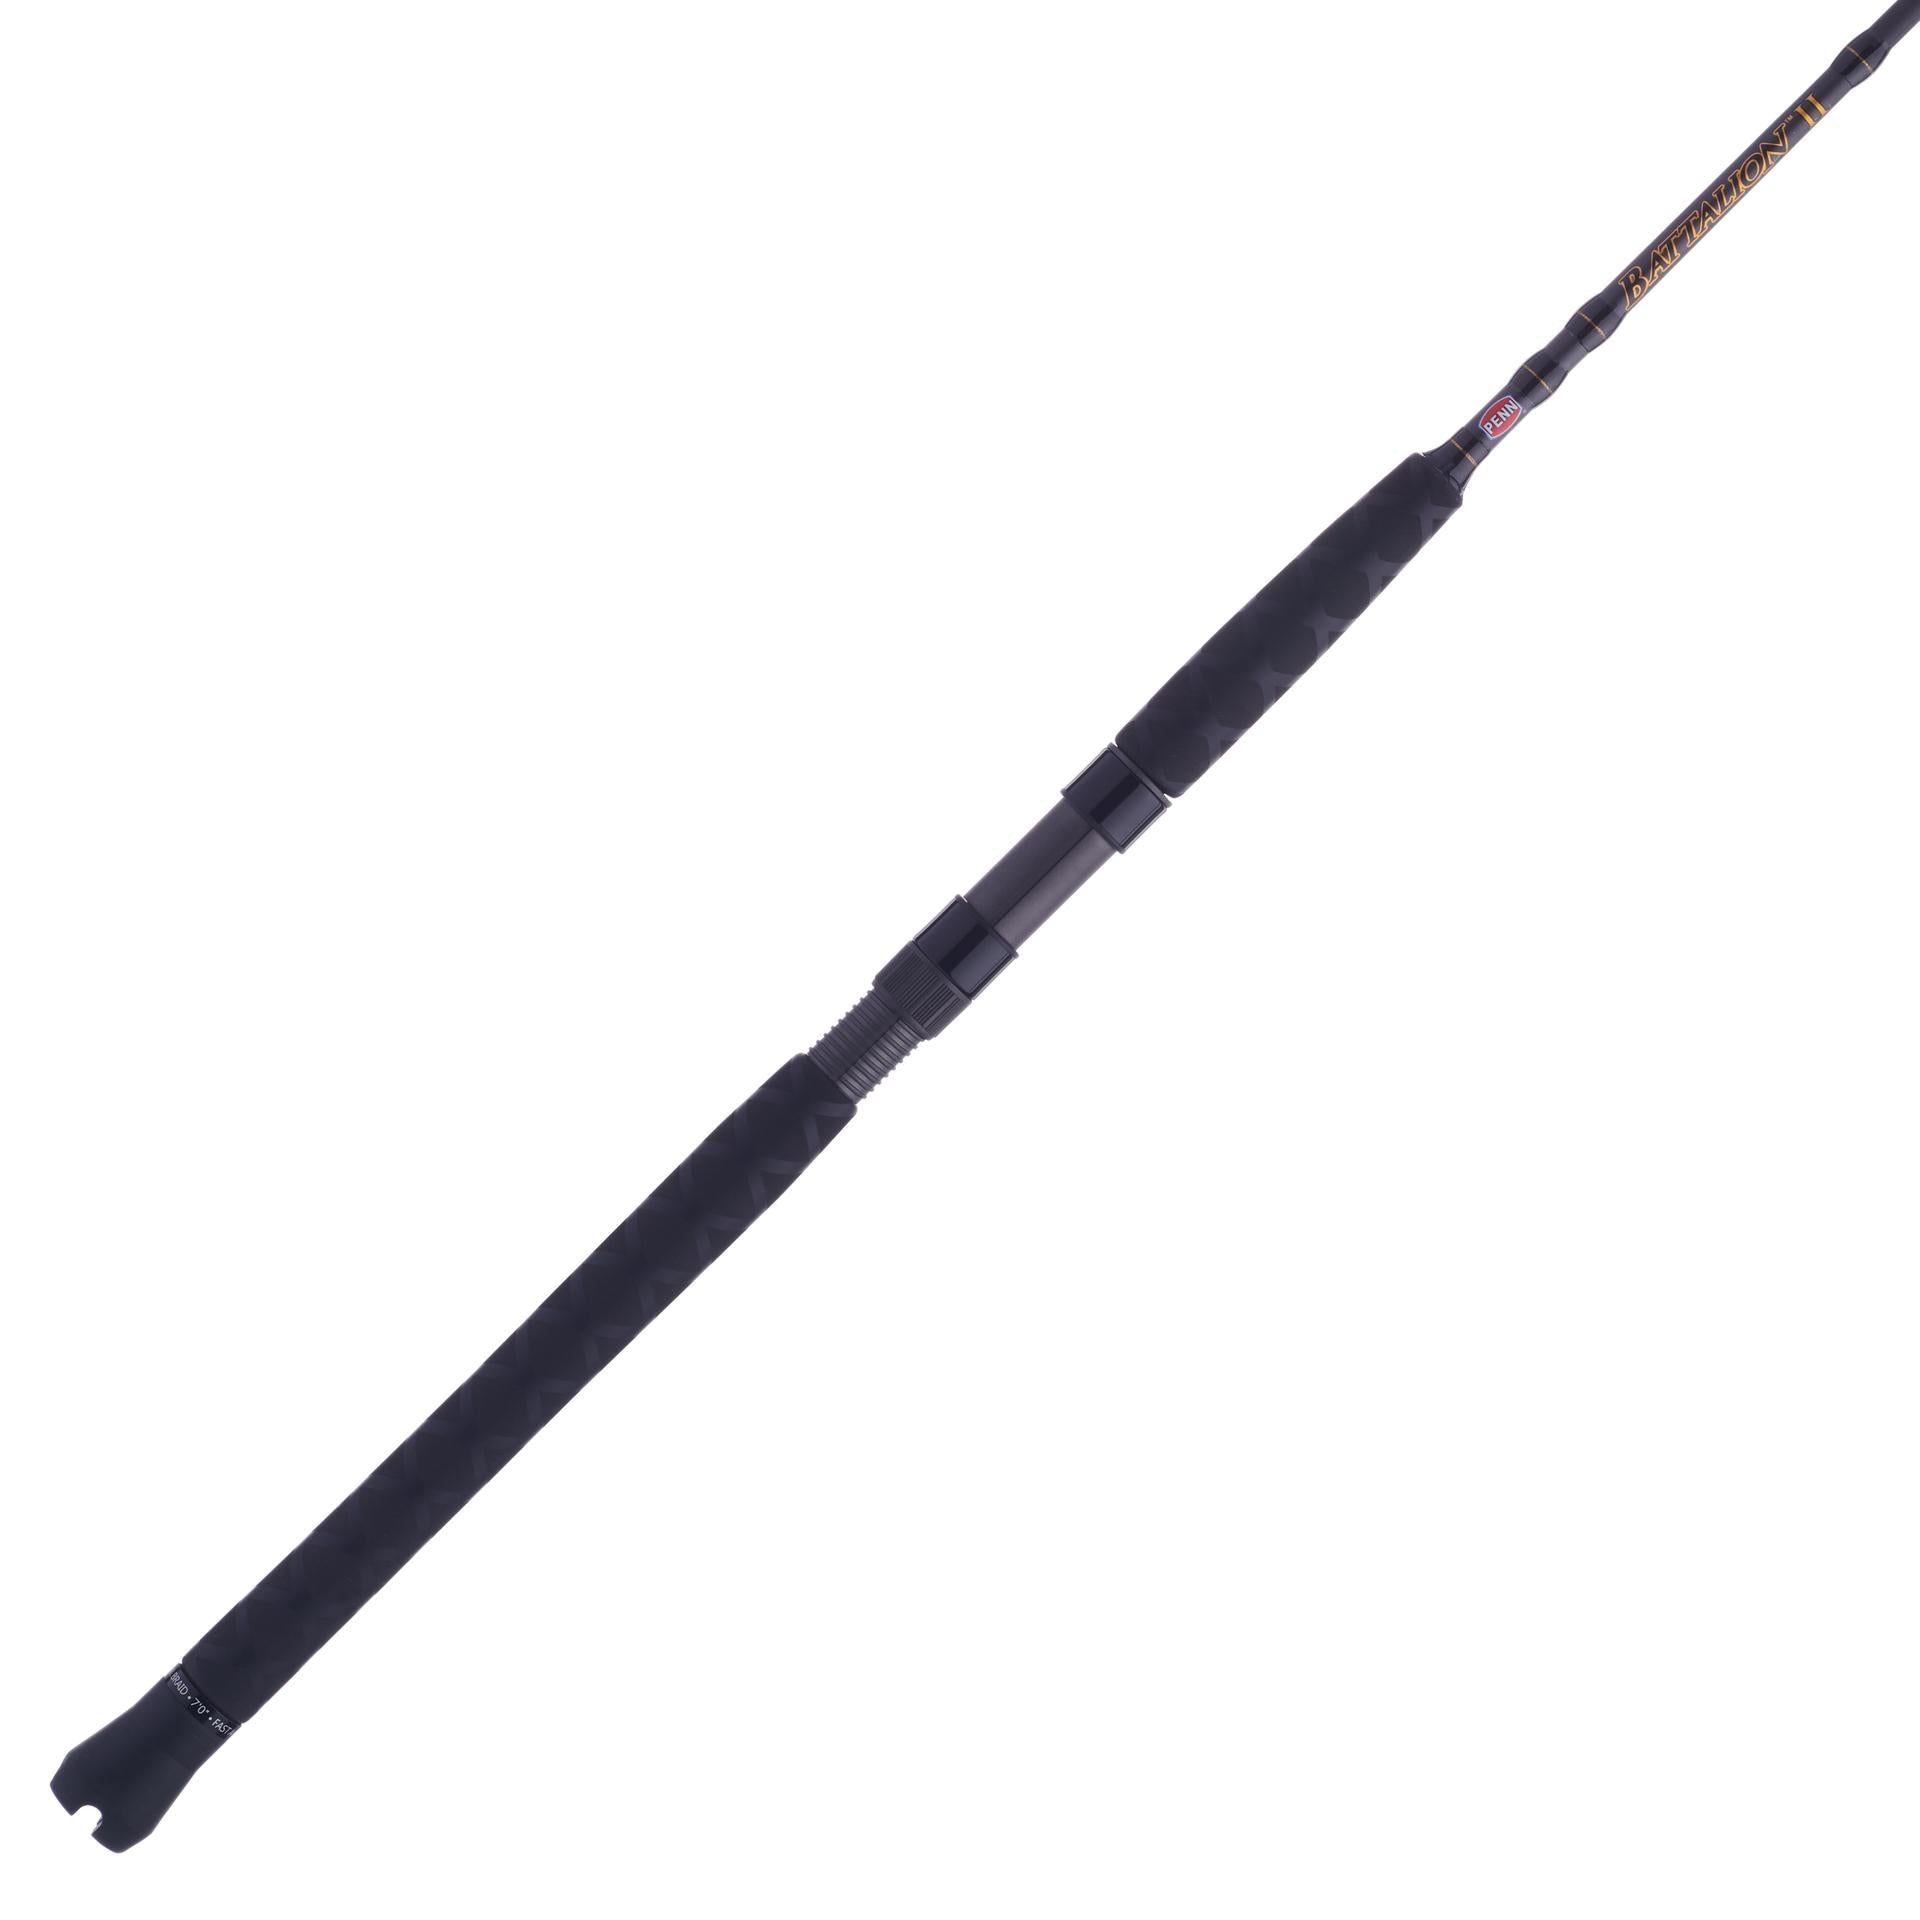 6'10 International V IGFA Conventional Rod, Medium Power